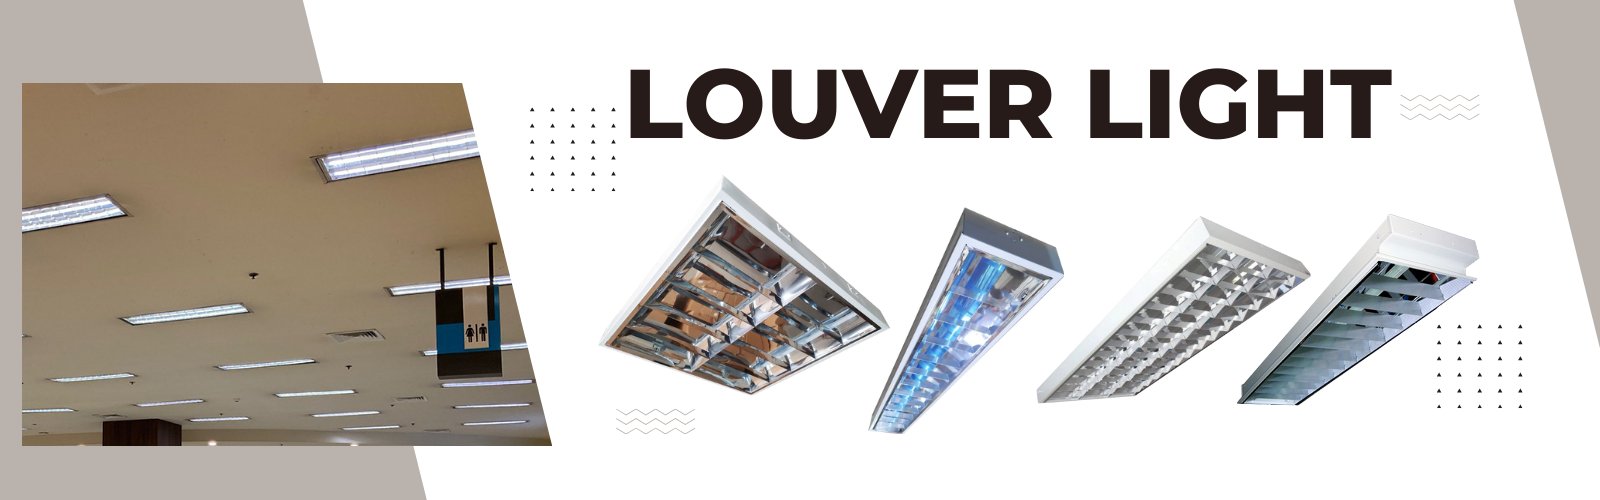 LED Louver Lights Ecoshift Shopify